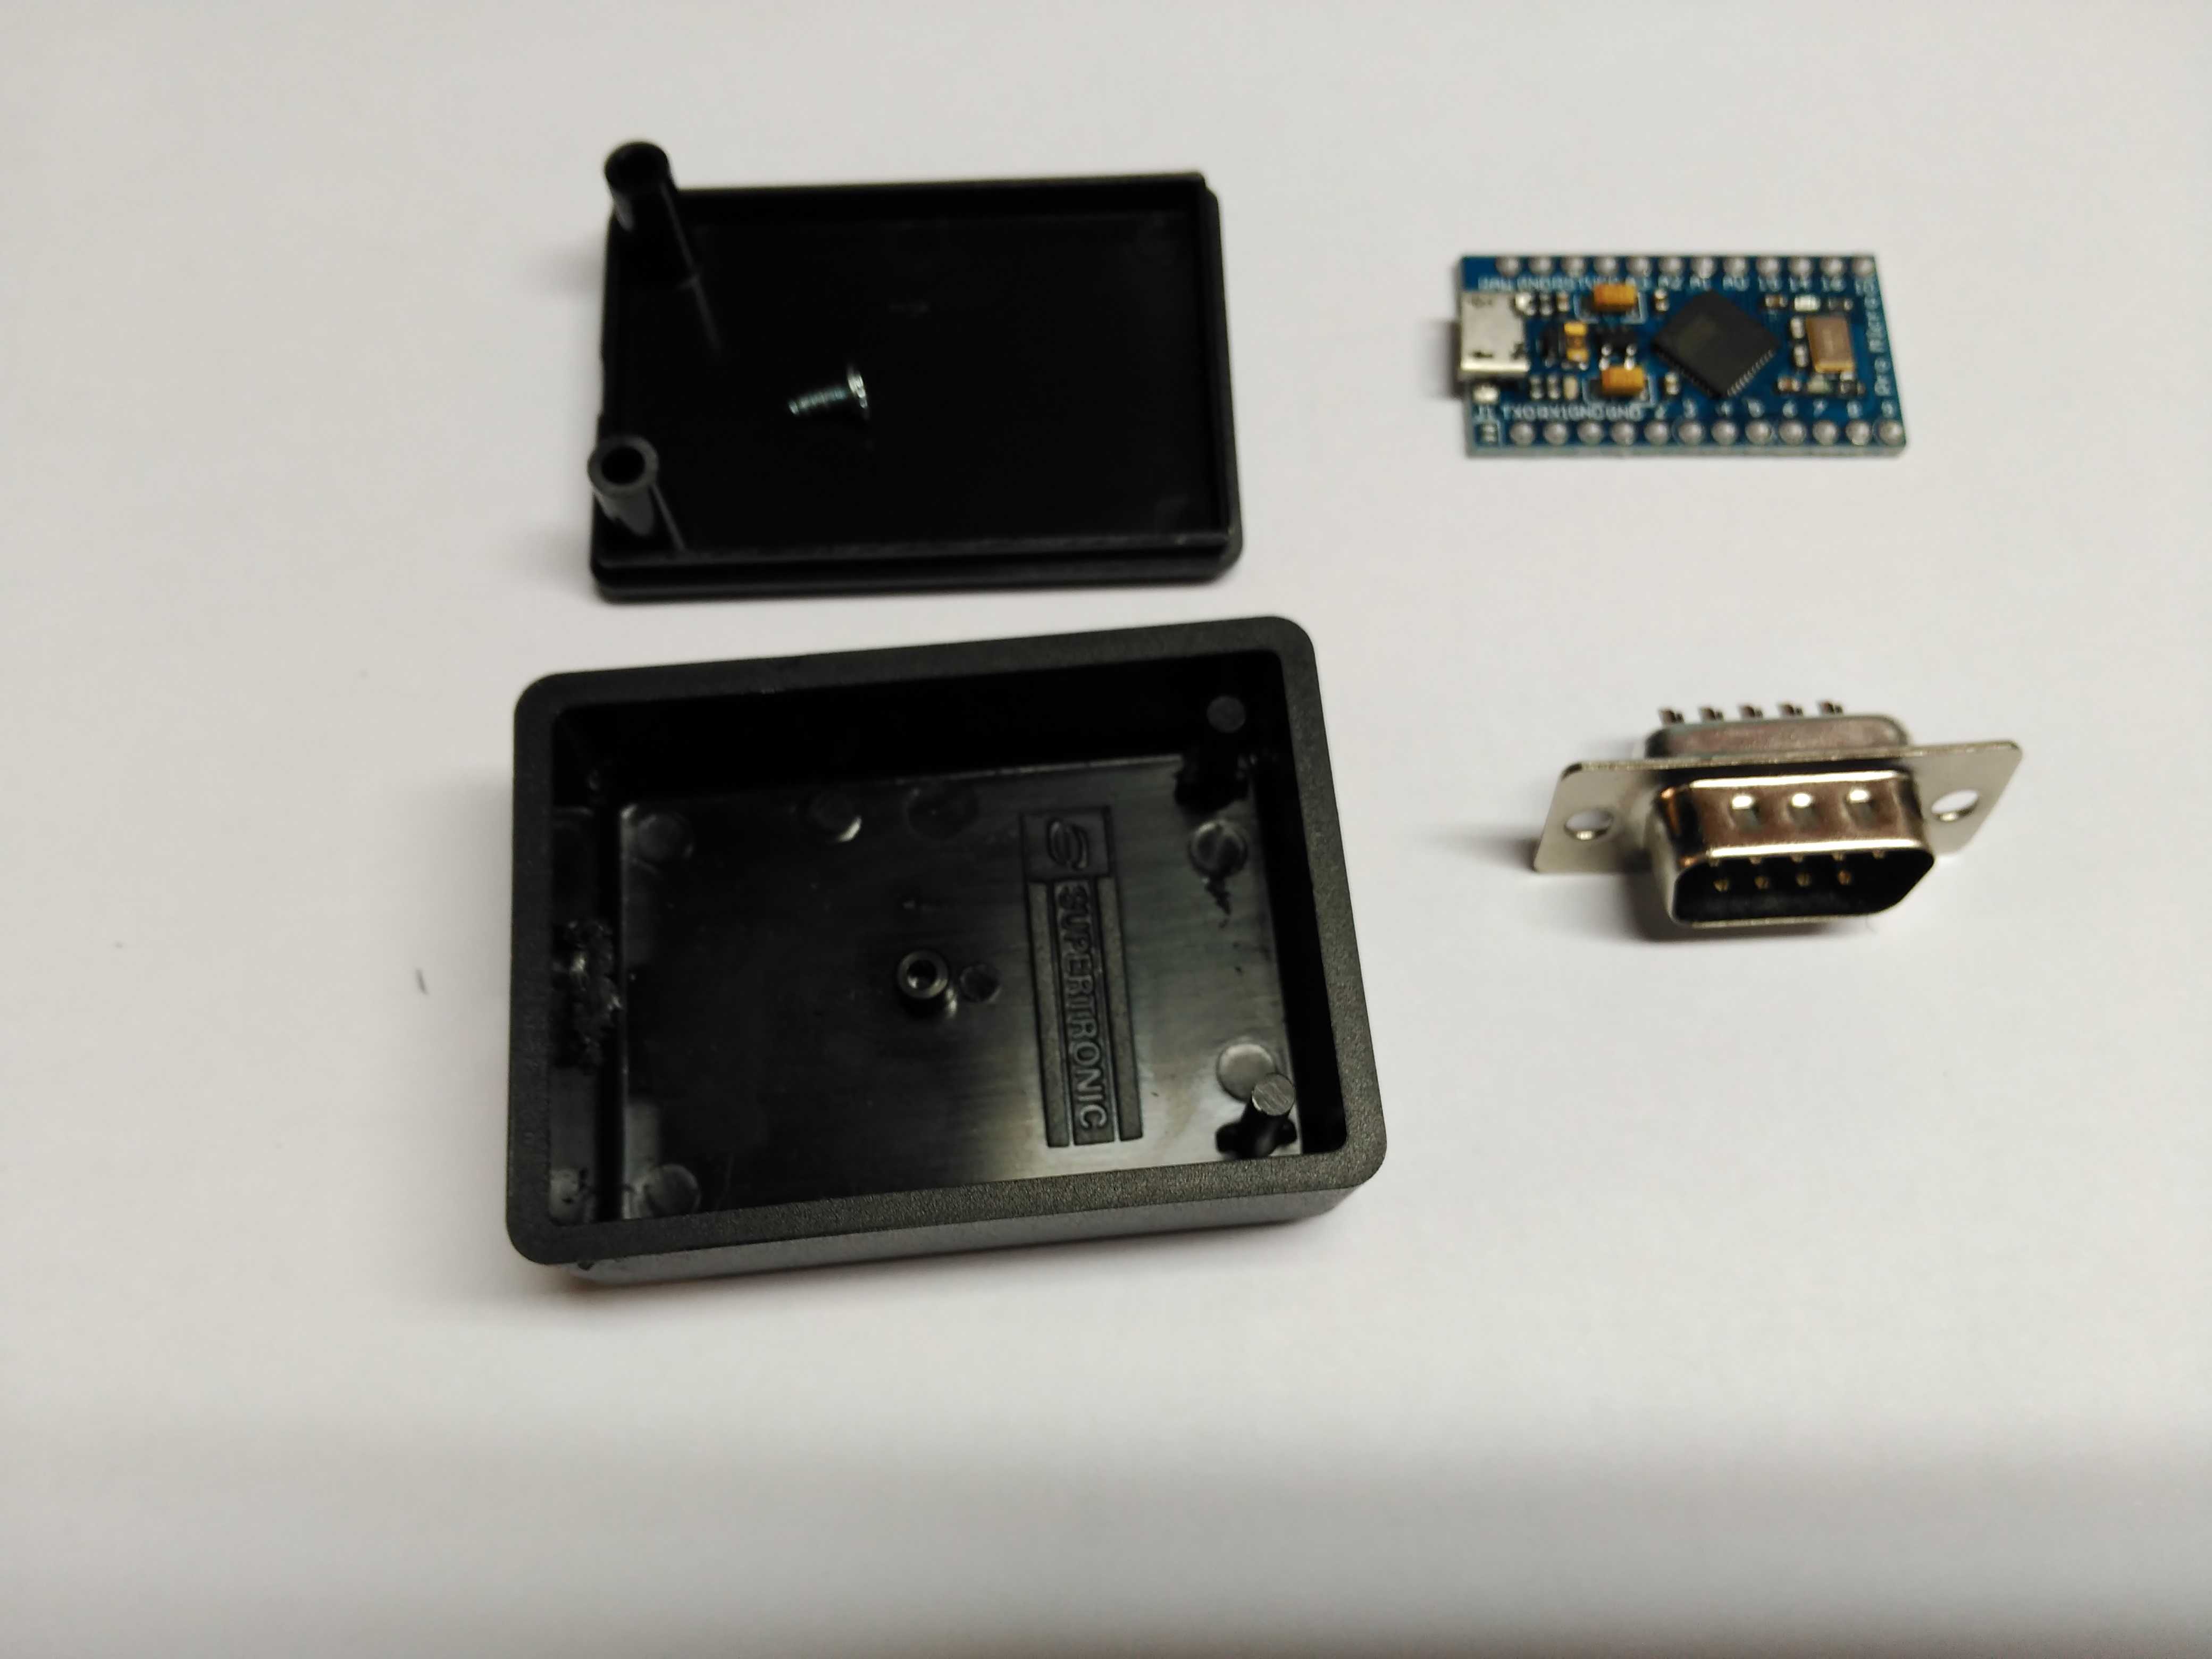 Câmbio / Shifer G27 USB Mod Arduino Leonardo Micro Pro 